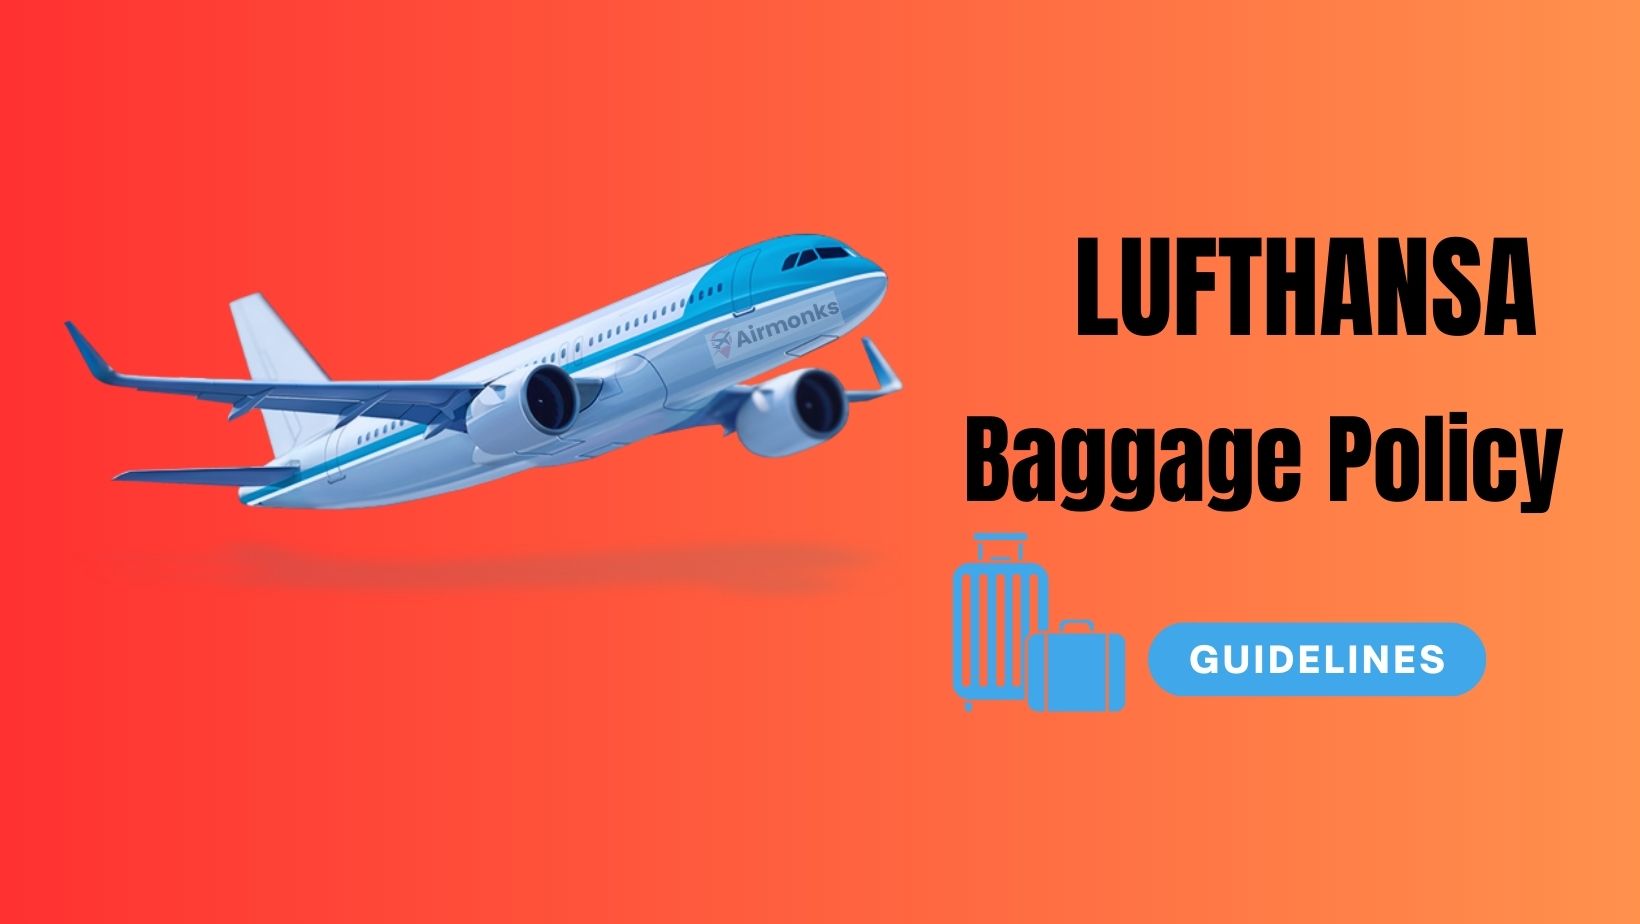 lufthansa baggage policy647895d87293e.jpg